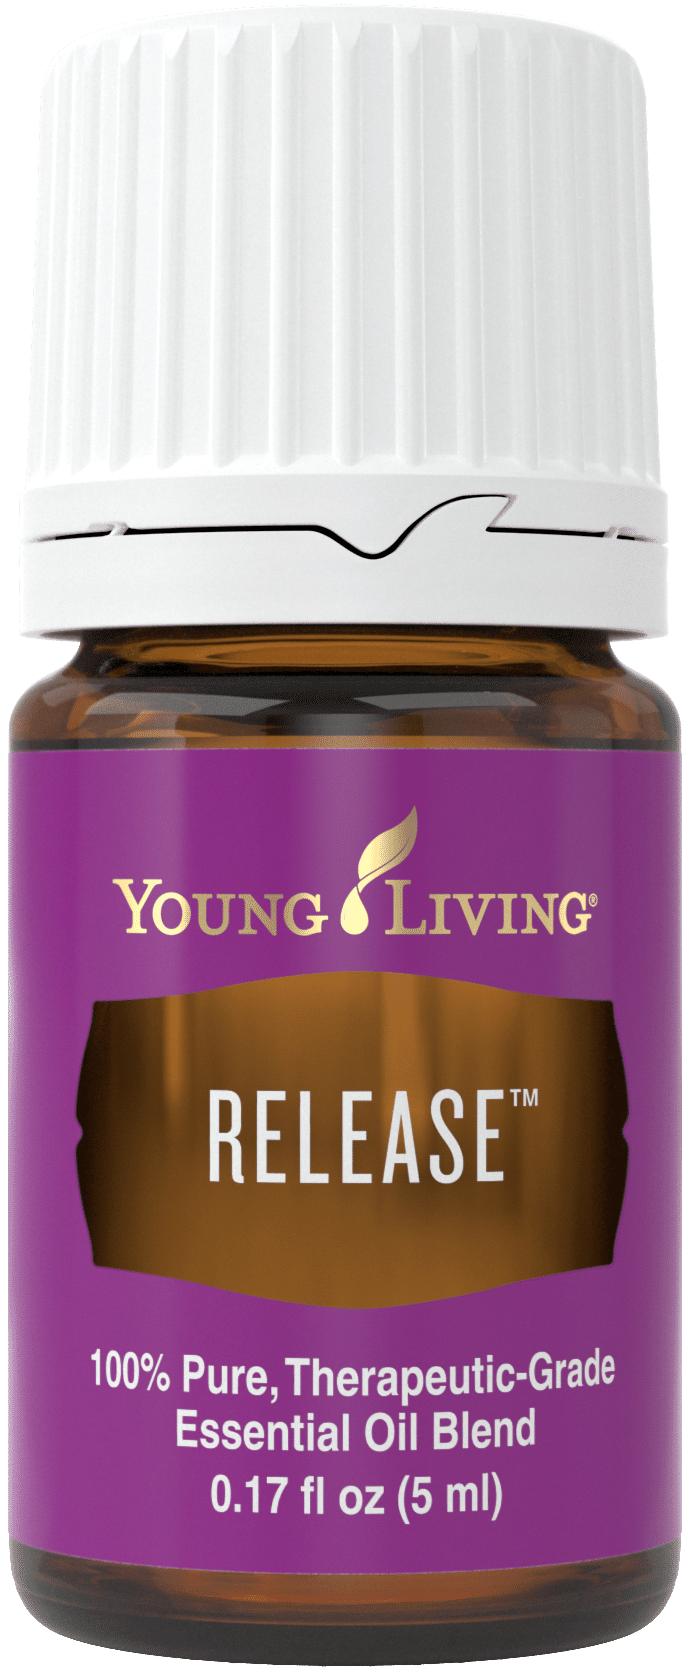 release essential oil